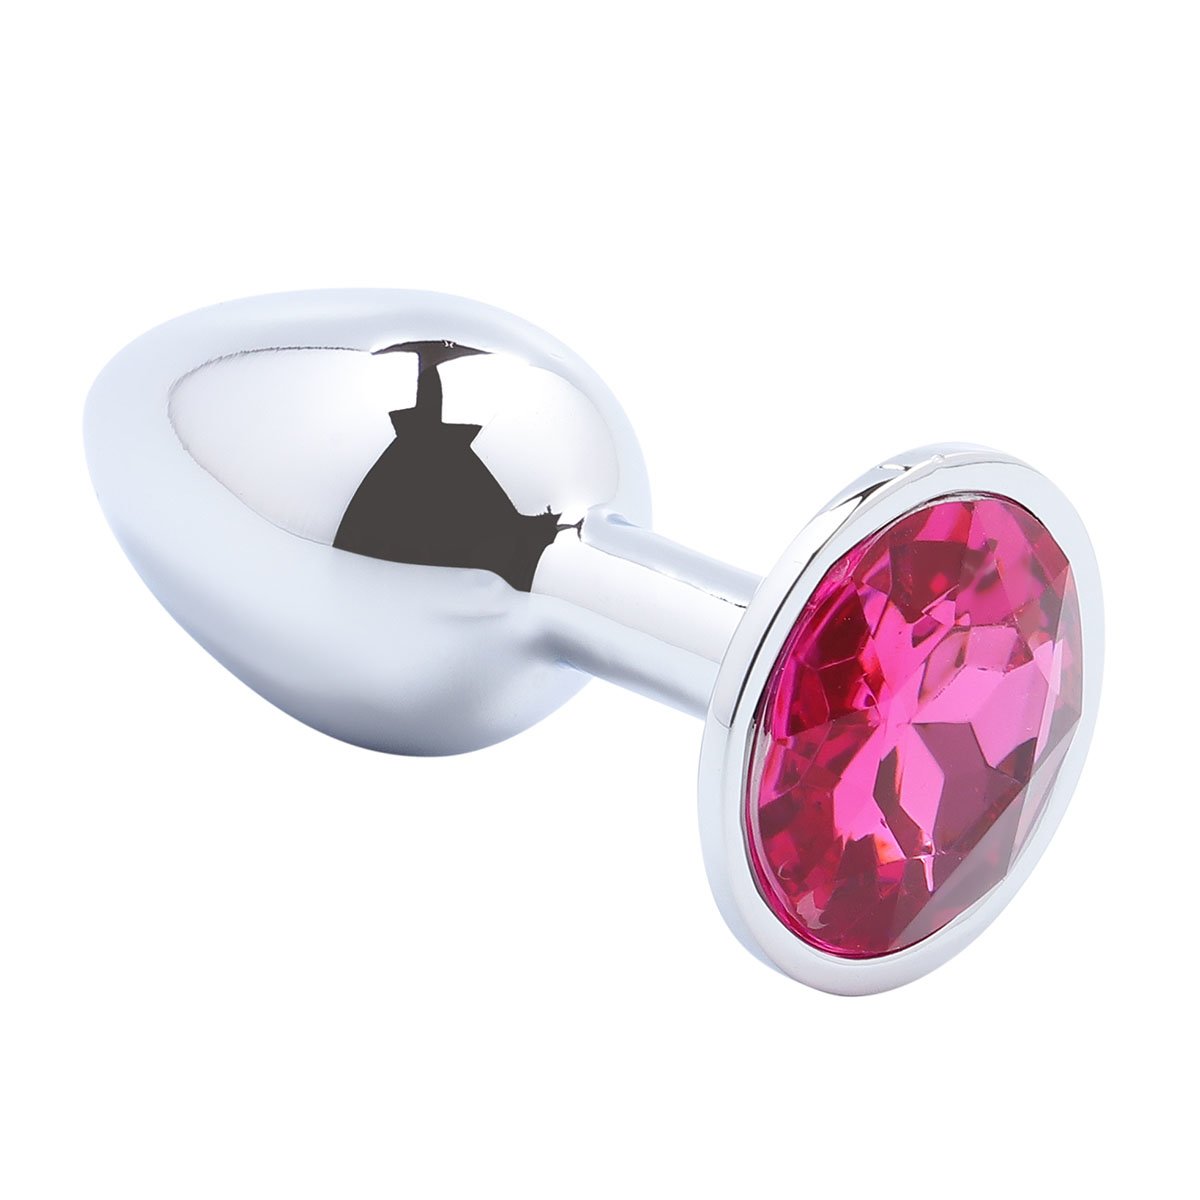 Foto van Banoch - Buttplug Aurora Hot Pink Small - Metalen buttplug - Diamant steen - Roze